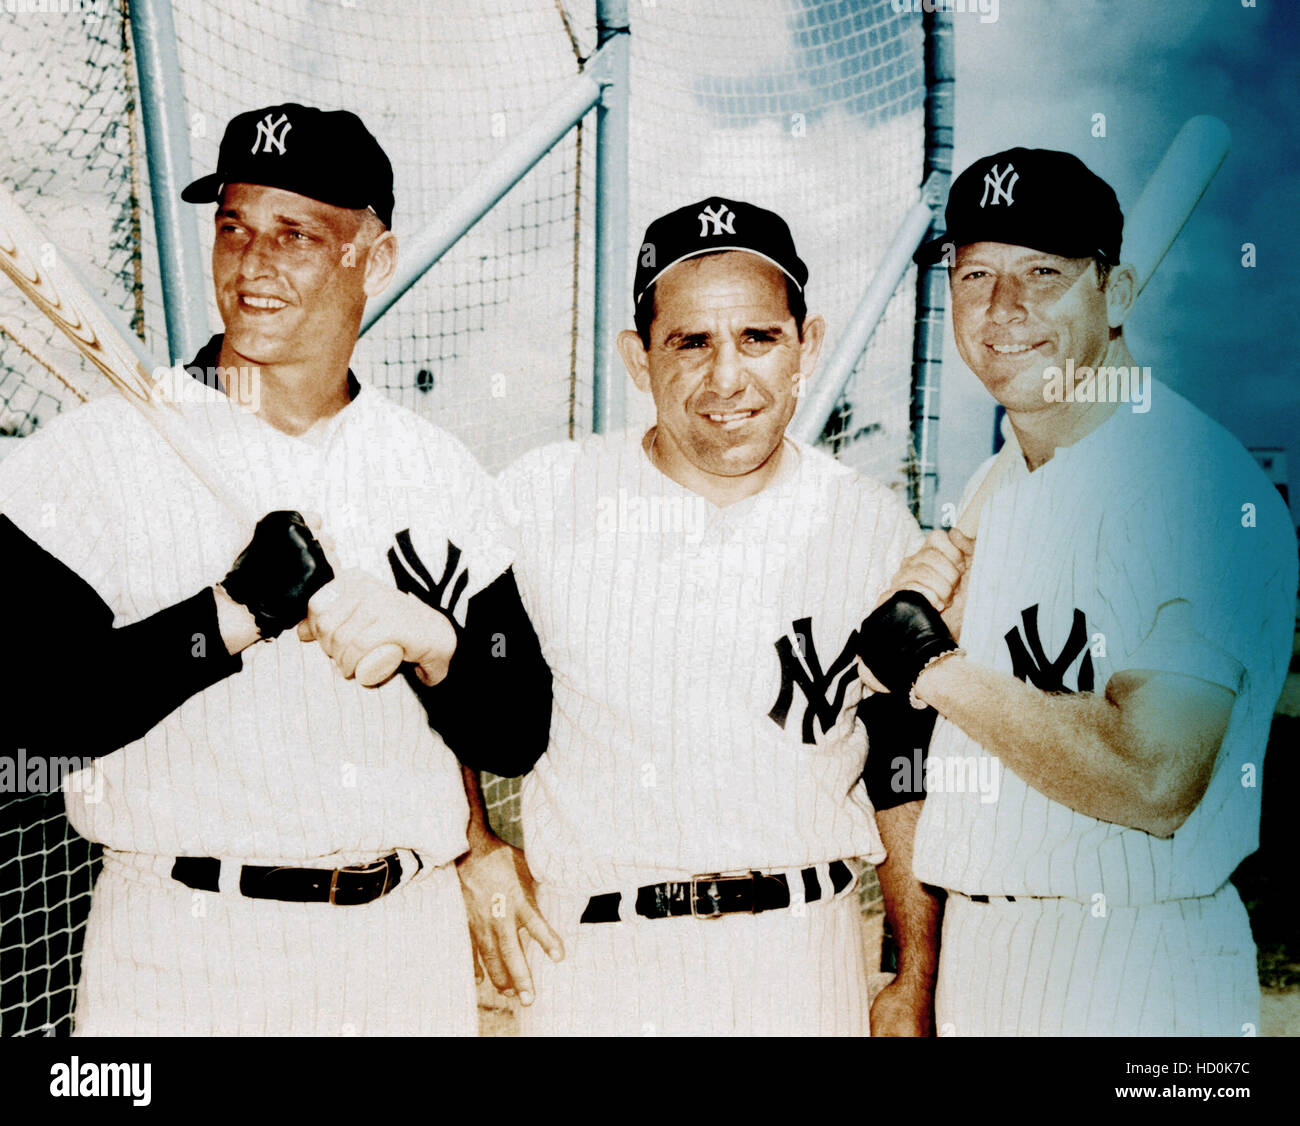 Who is Yankees' best center fielder ever: Joe DiMaggio or Mickey Mantle? 